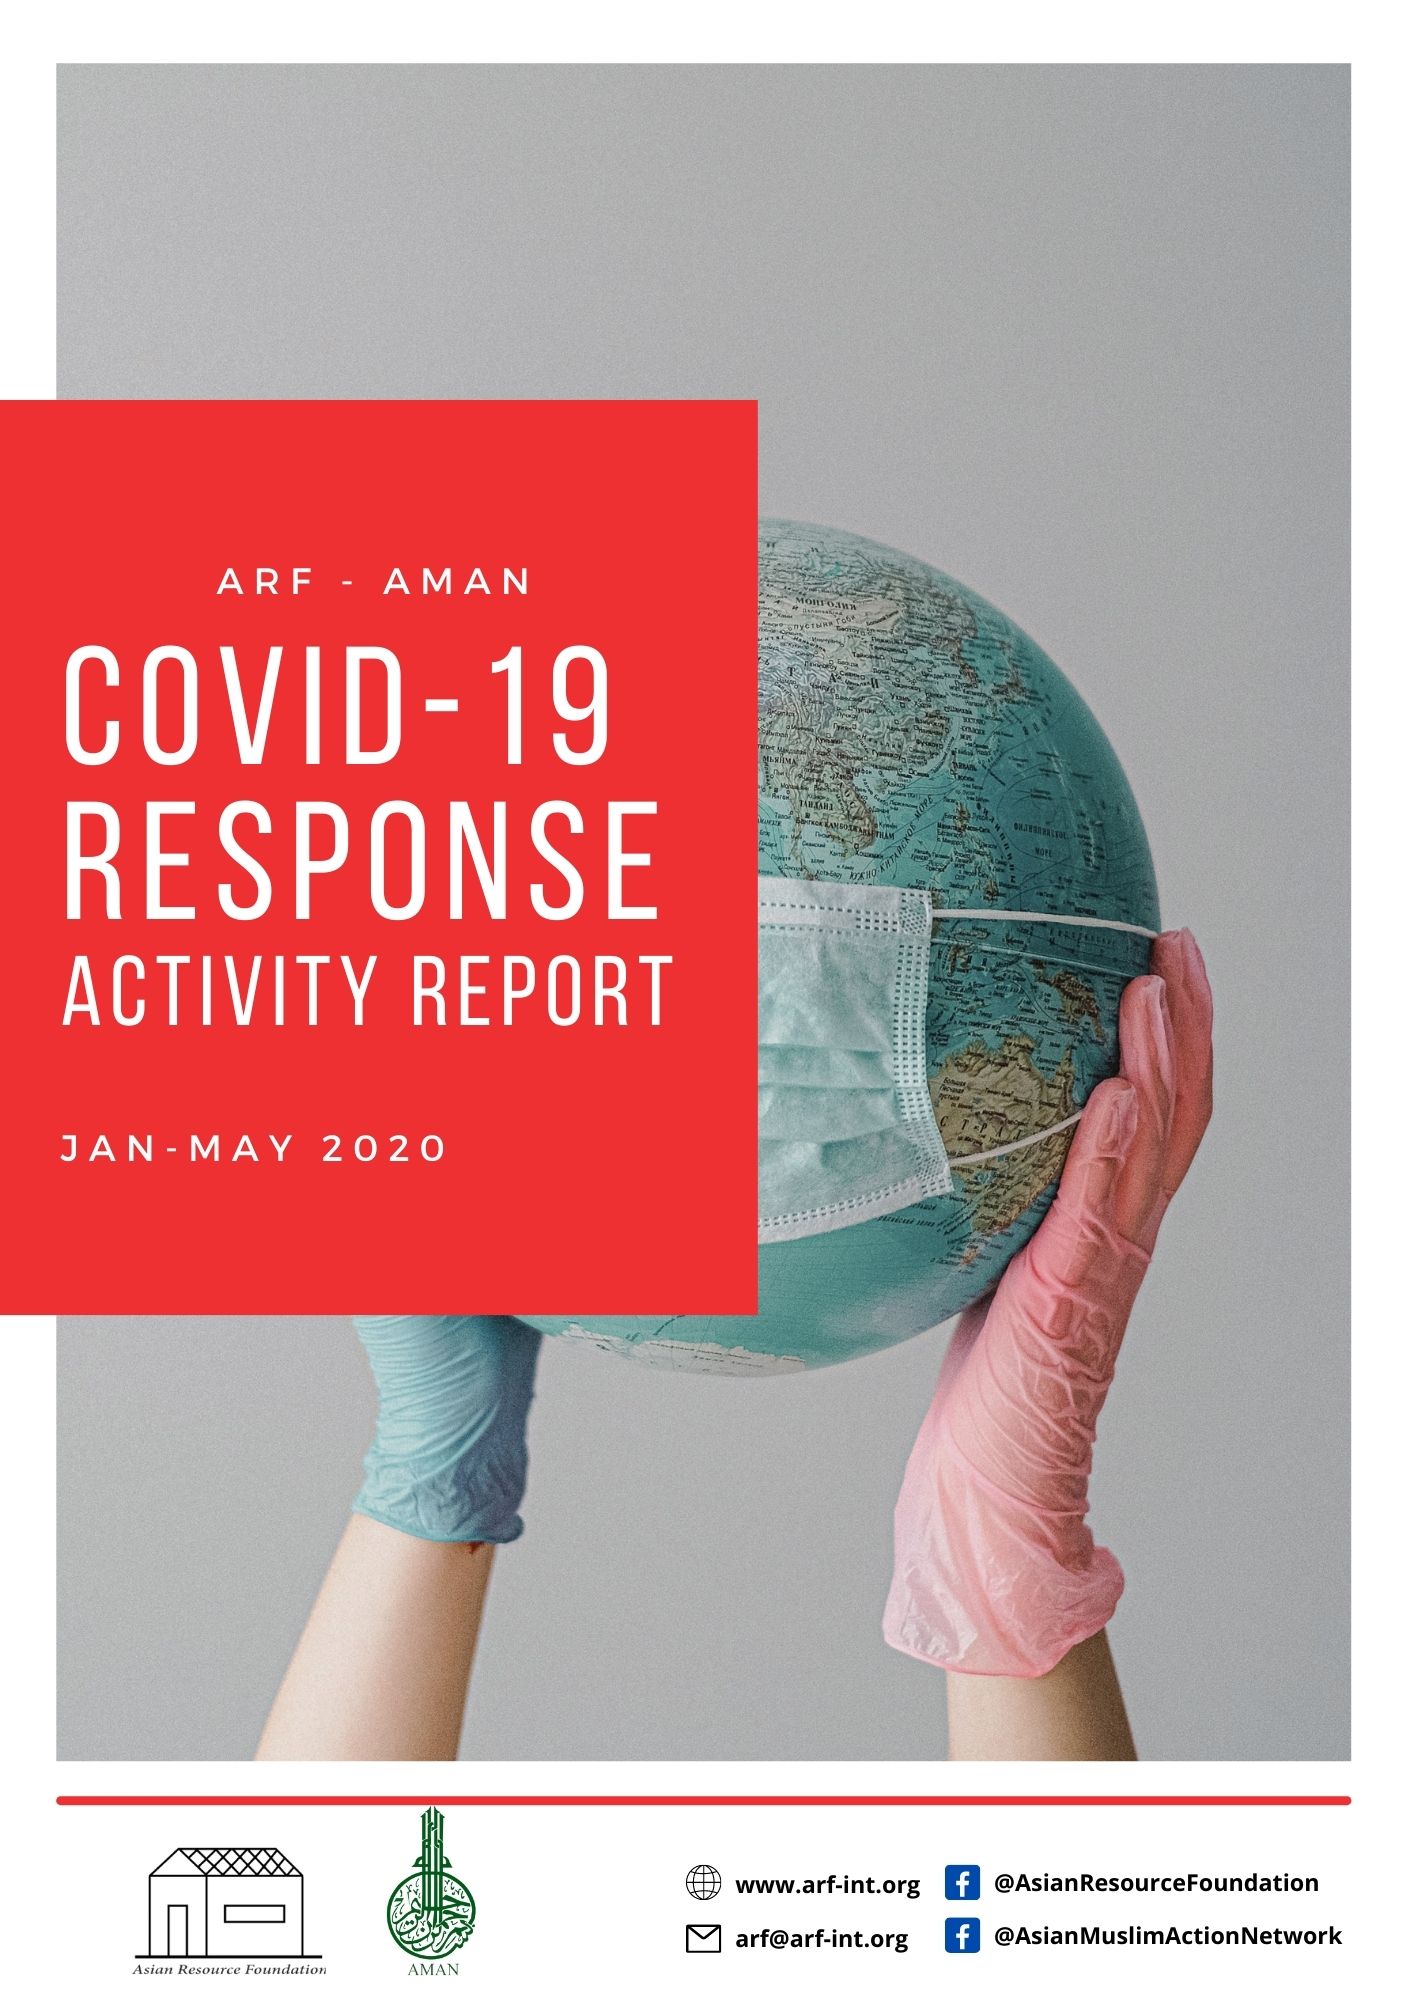 ARF-AMAN COVID-19 RESPONSE ACTIVITY REPORT